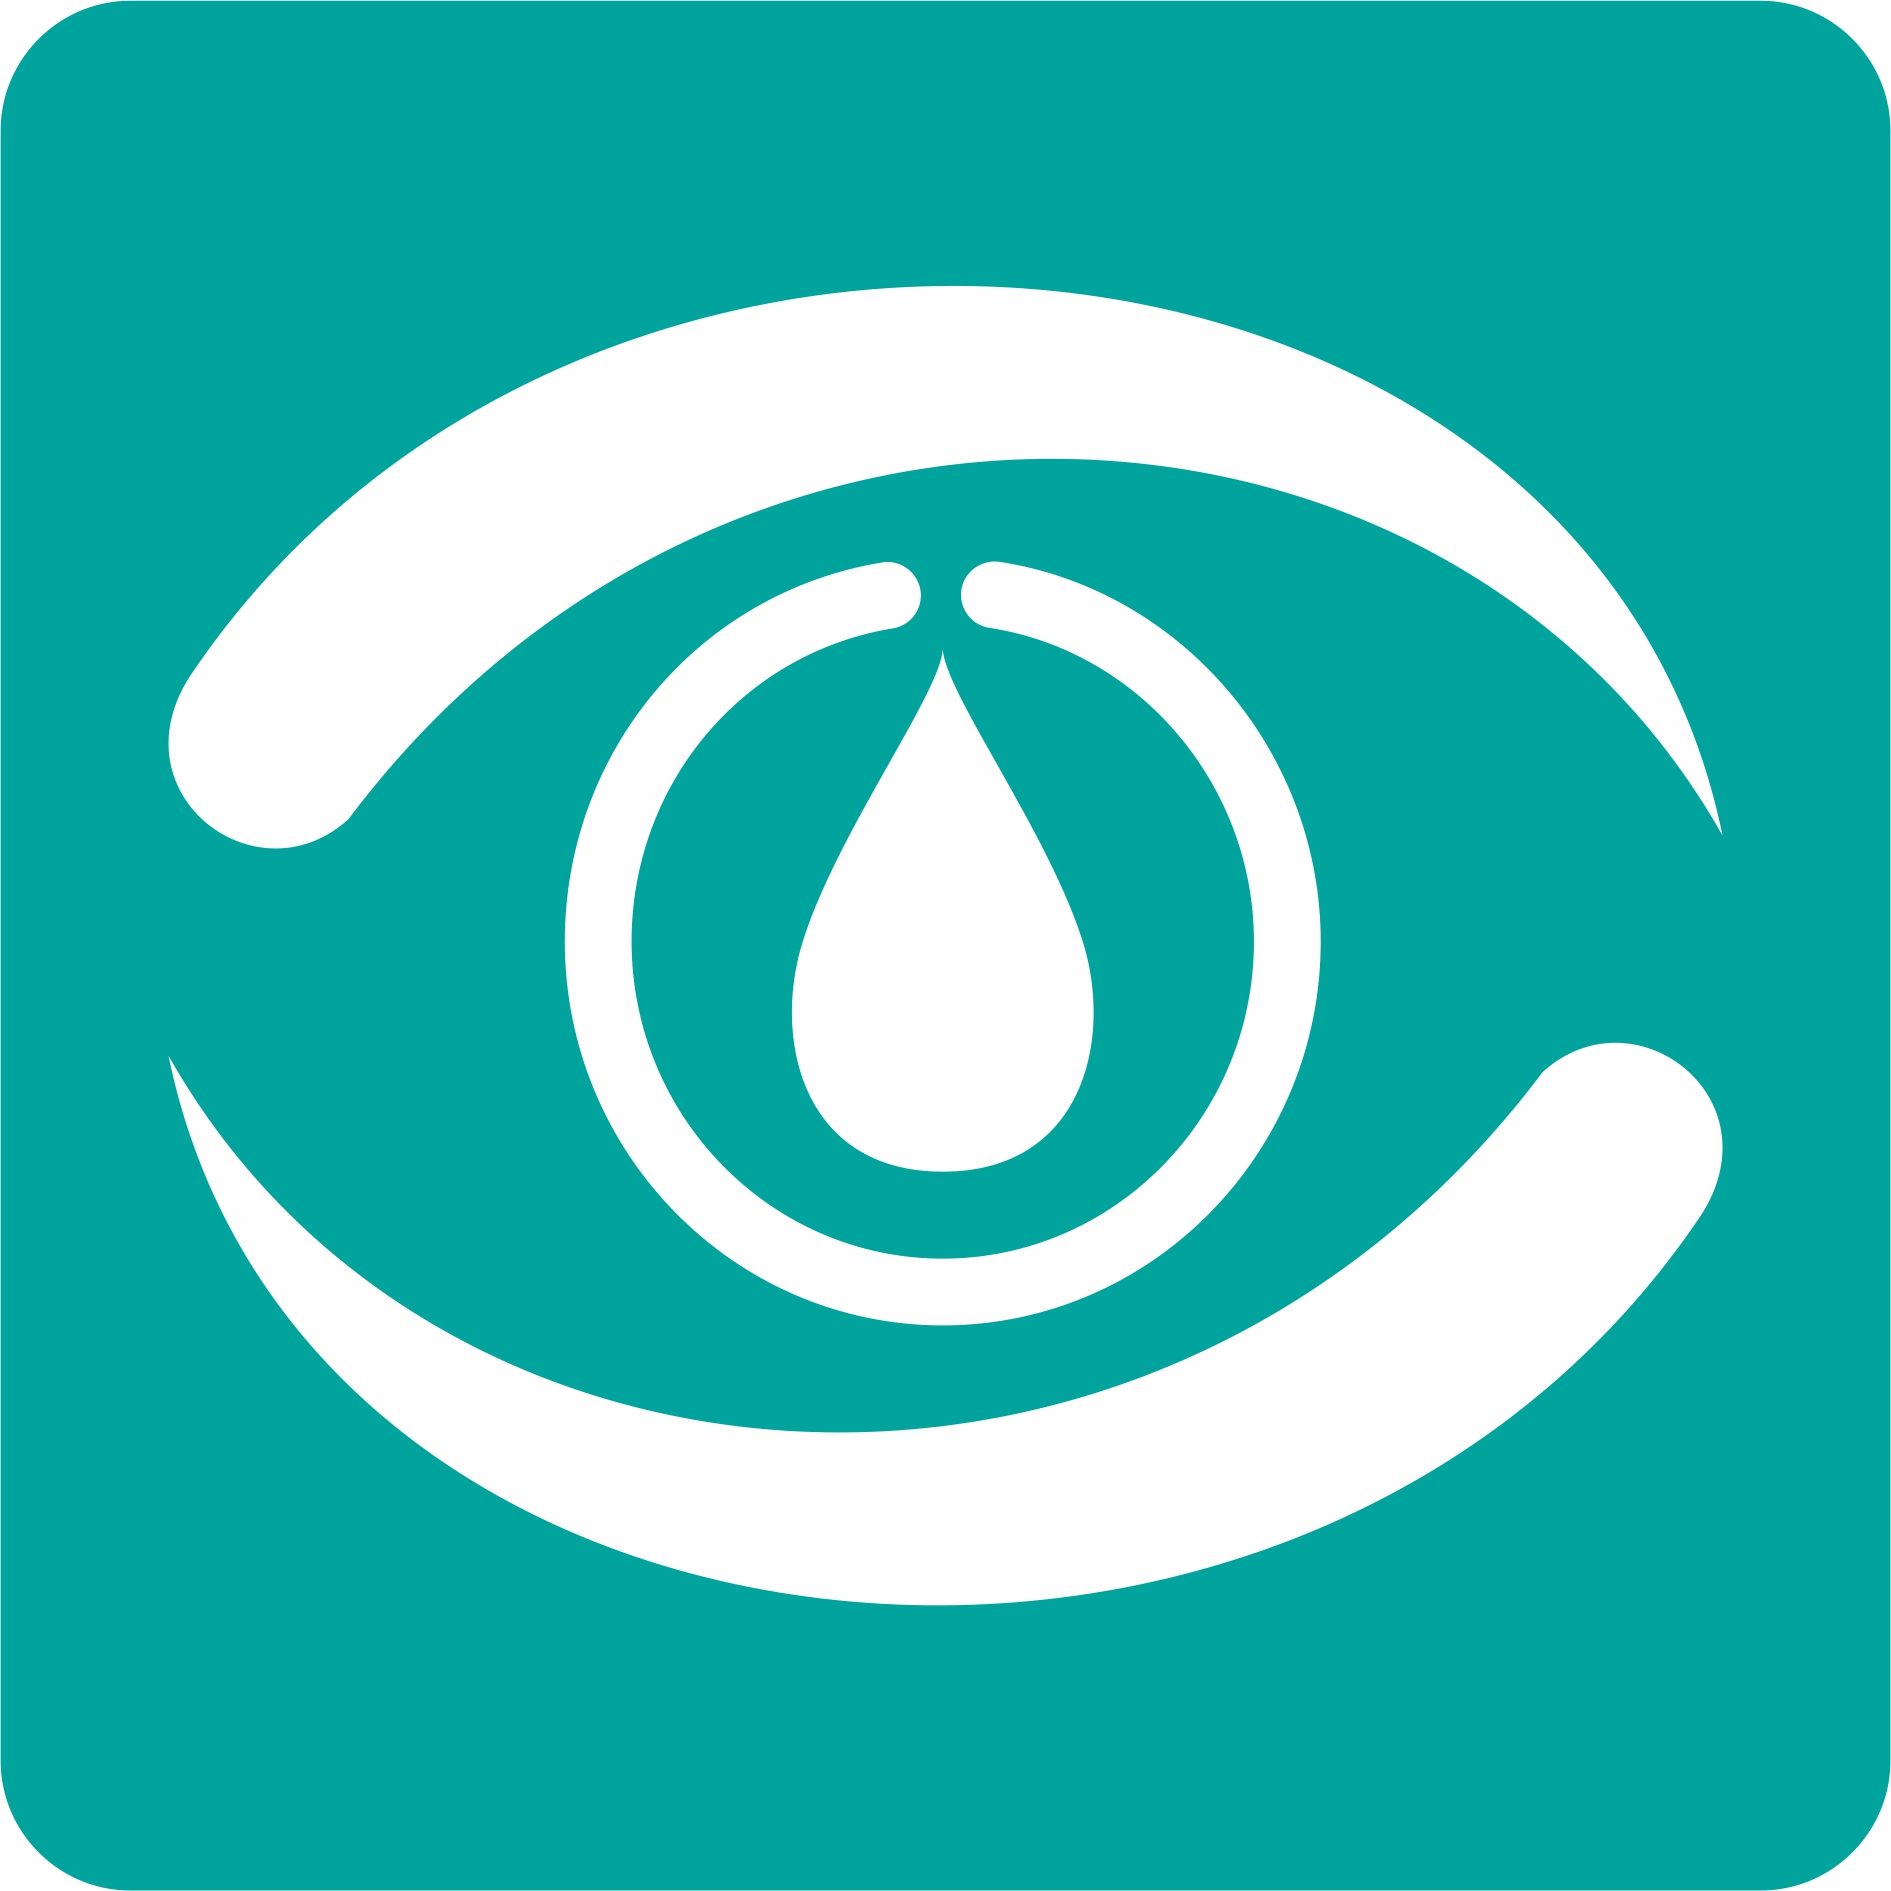 com.jes.visualdevice logo